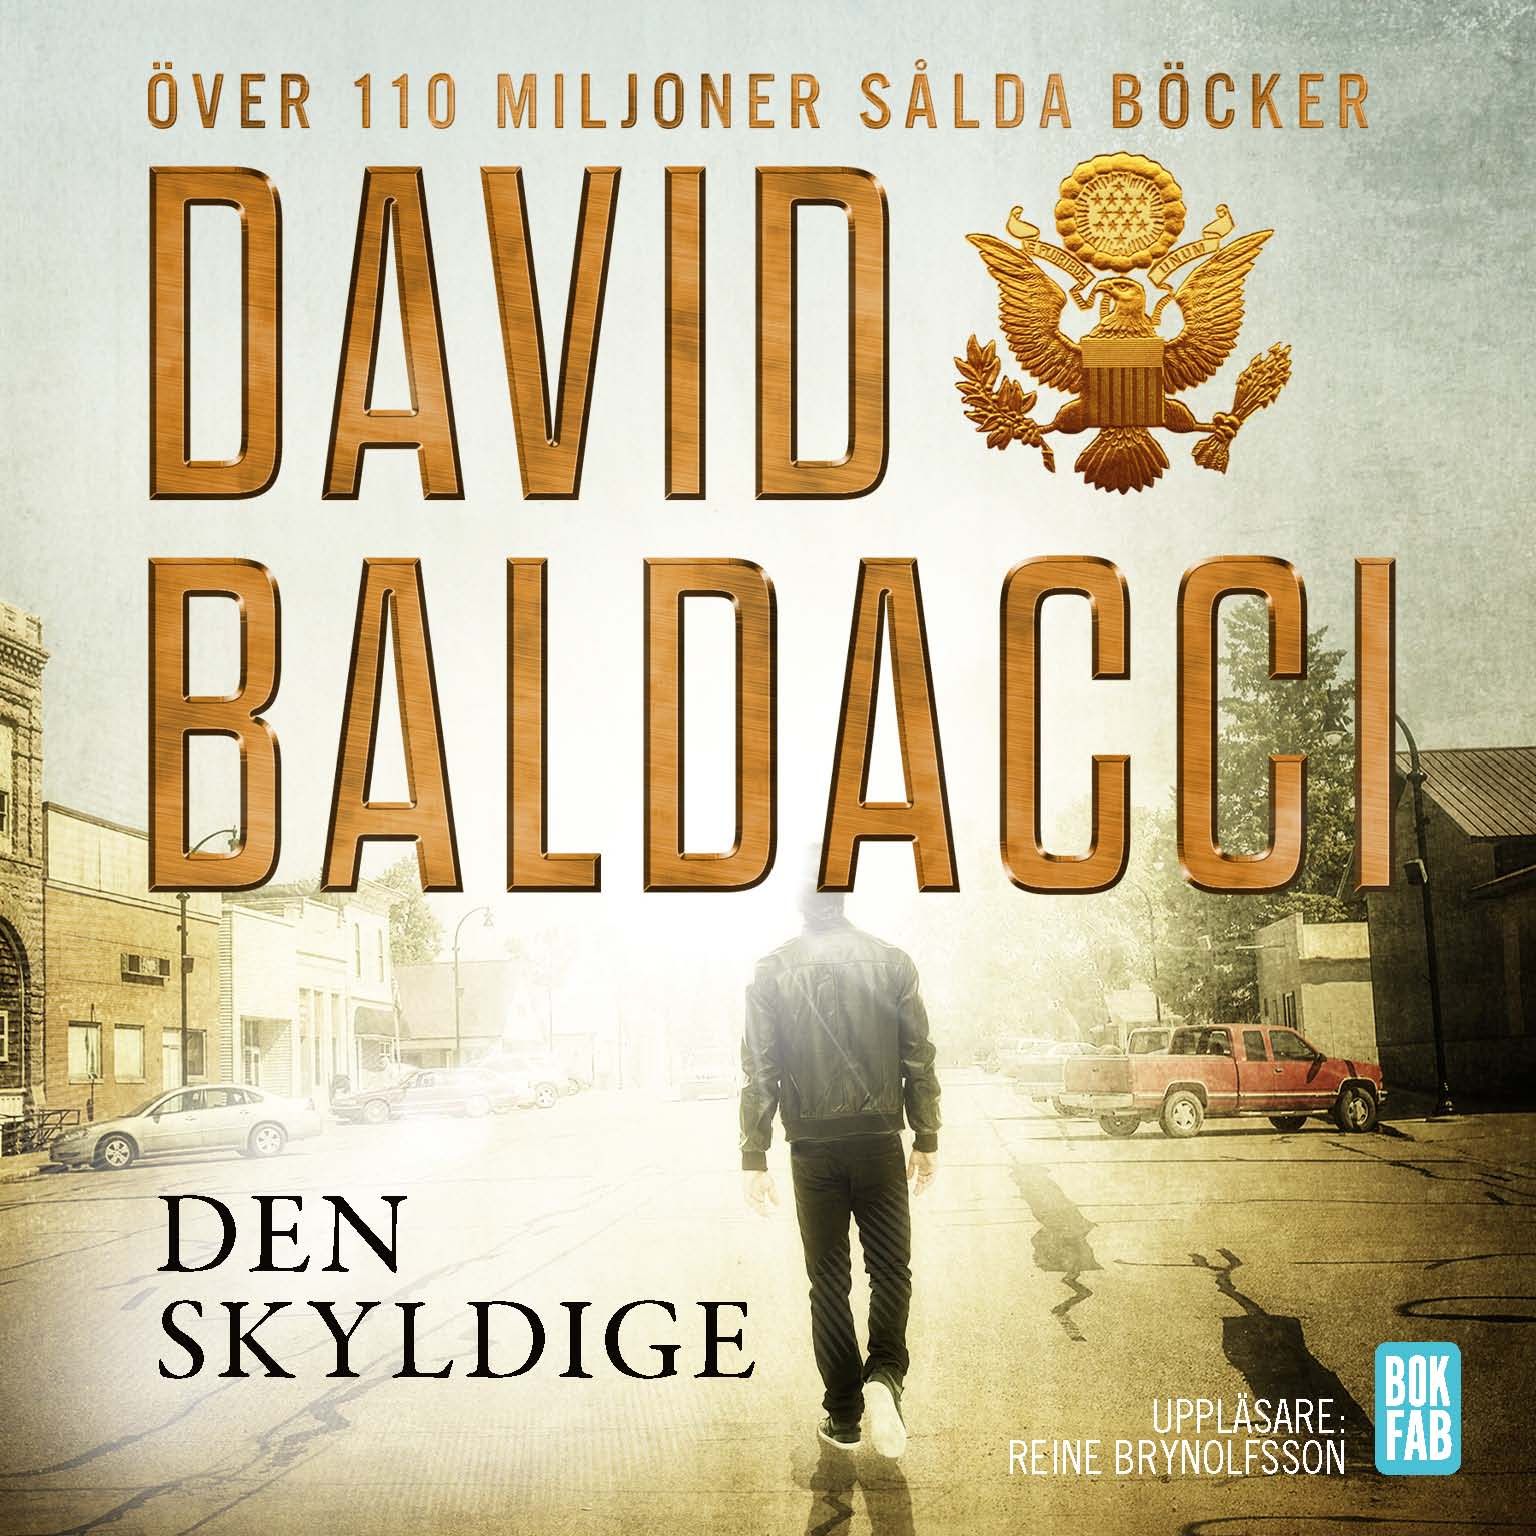 Den skyldige, audiobook by David Baldacci